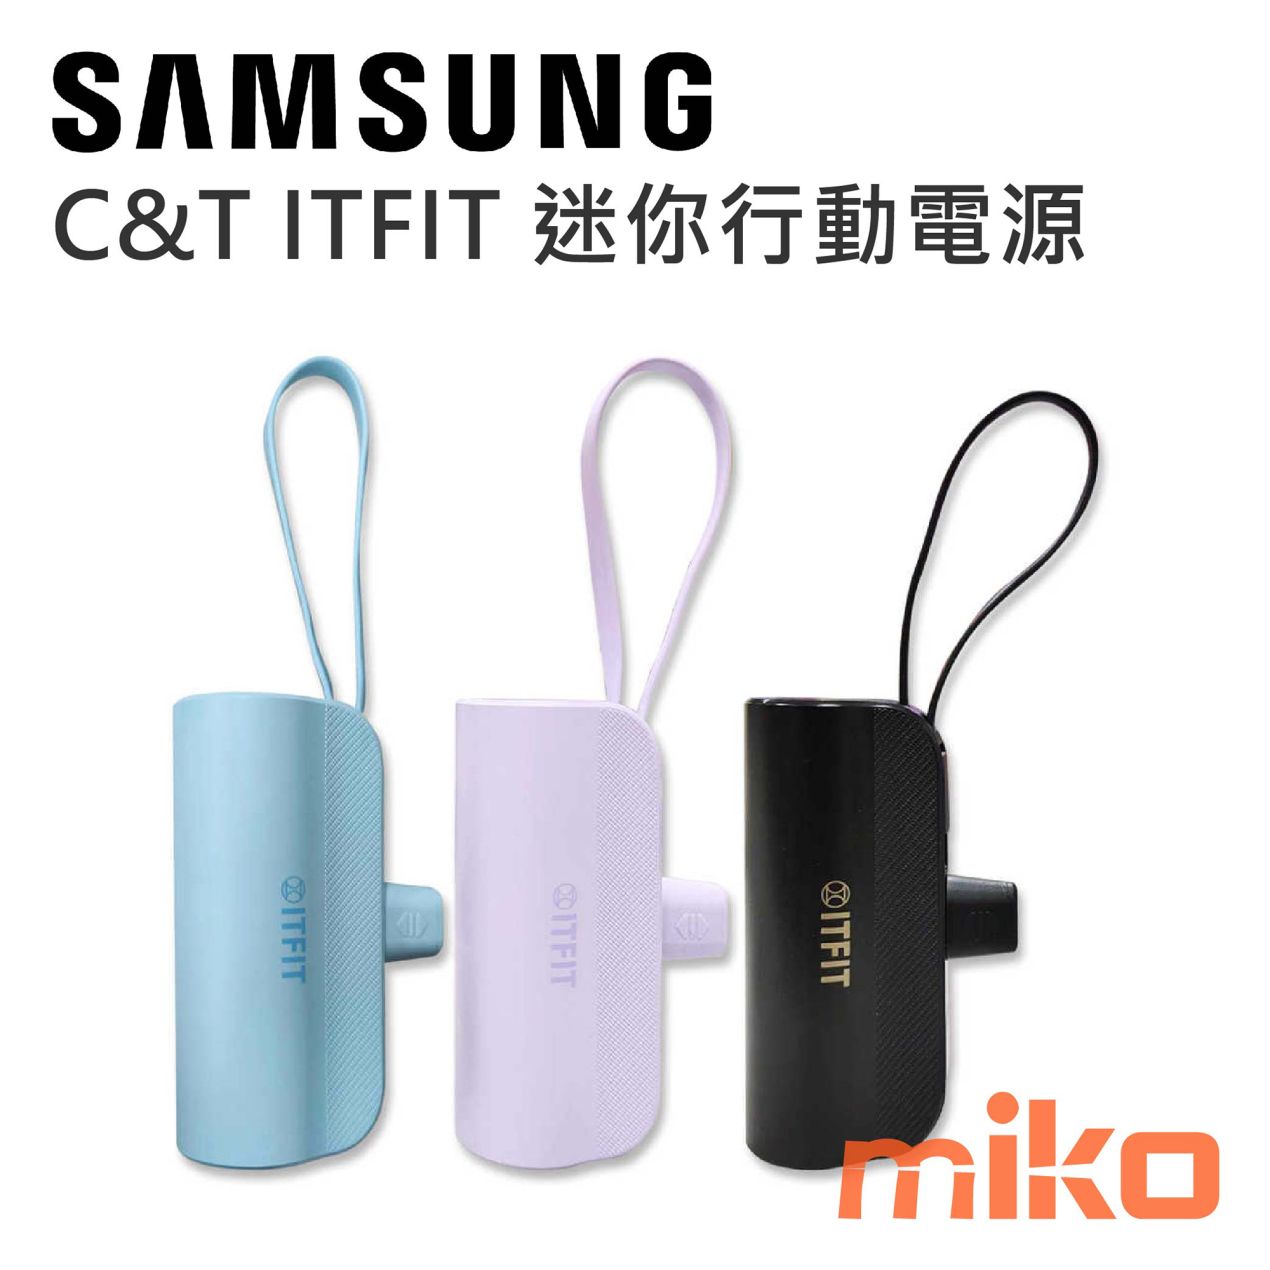 Samsung C T ITFIT 迷你行動電源(支架式) 5000mAh PW08